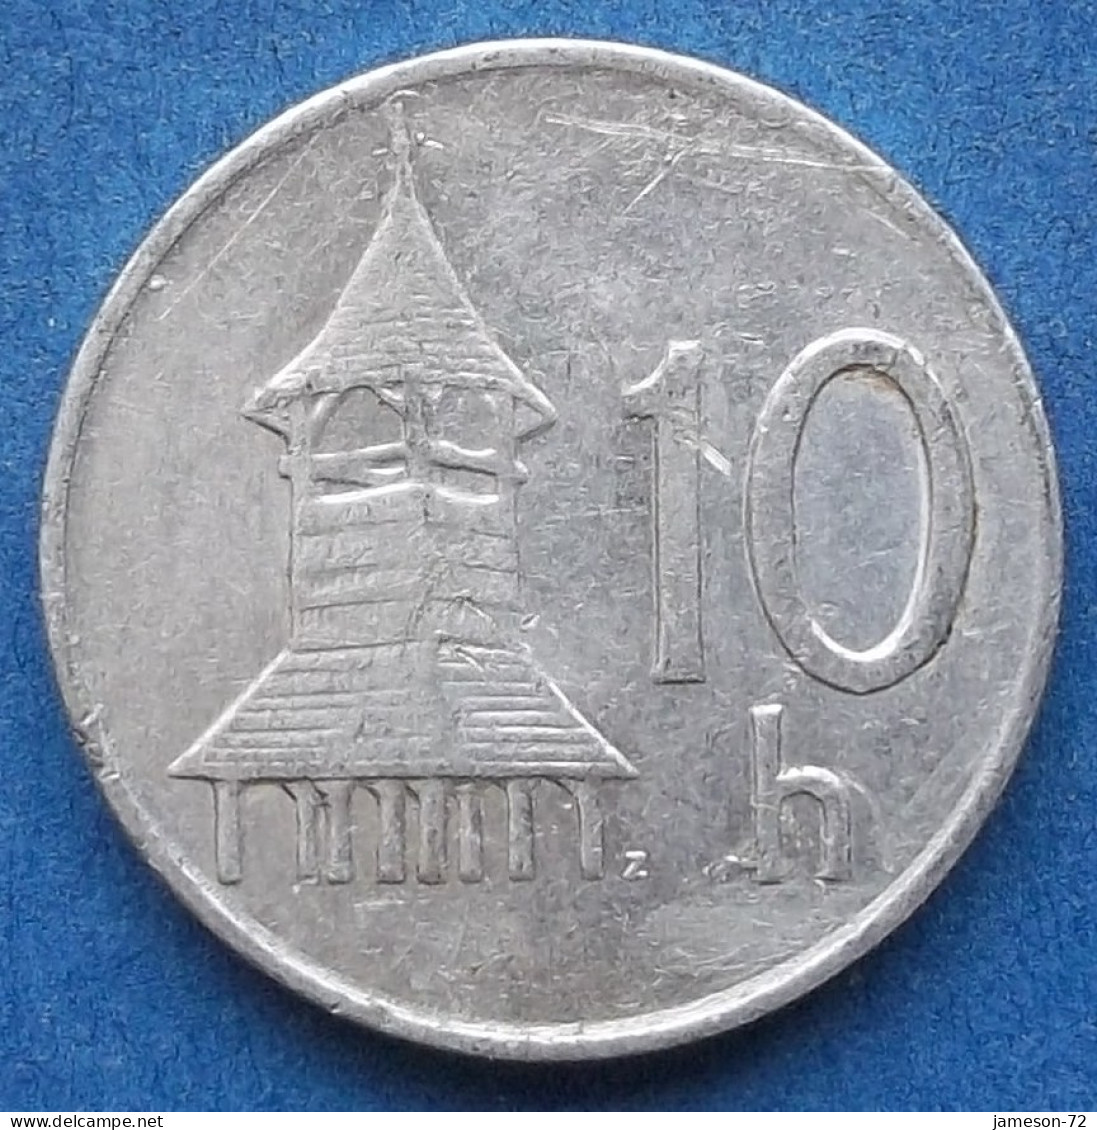 SLOVAKIA - 10 Halierov 1993 "church Steeple" KM# 17 Republic - Edelweiss Coins - Slovakia